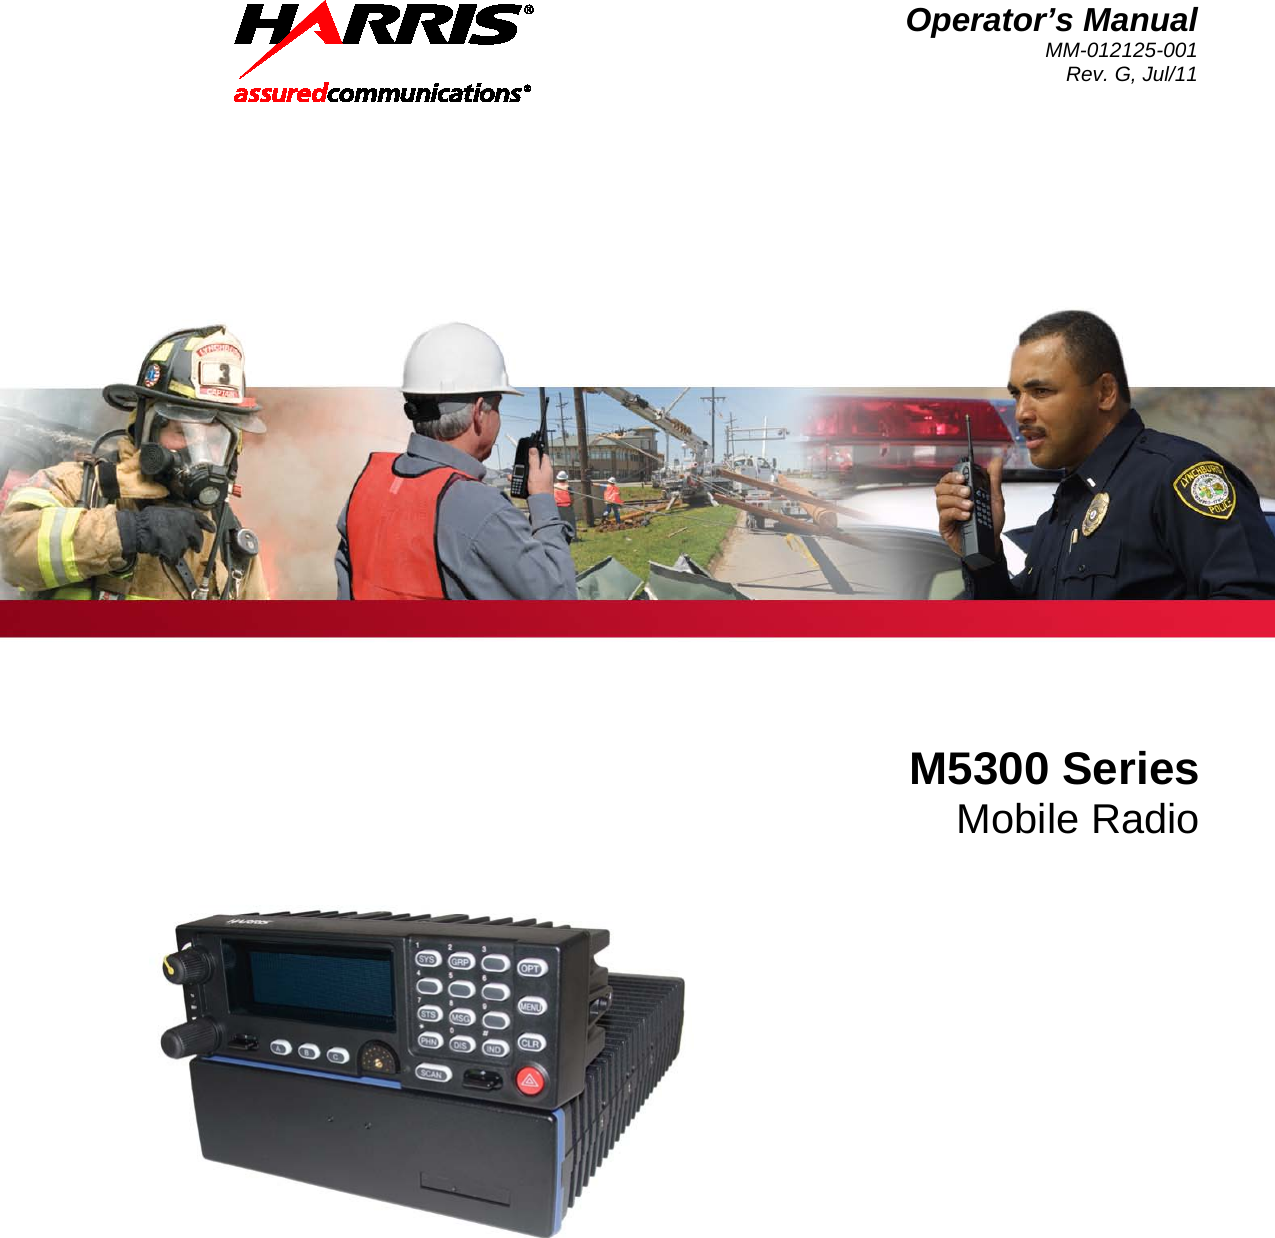  Operator’s Manual MM-012125-001 Rev. G, Jul/11    M5300 Series Mobile Radio    